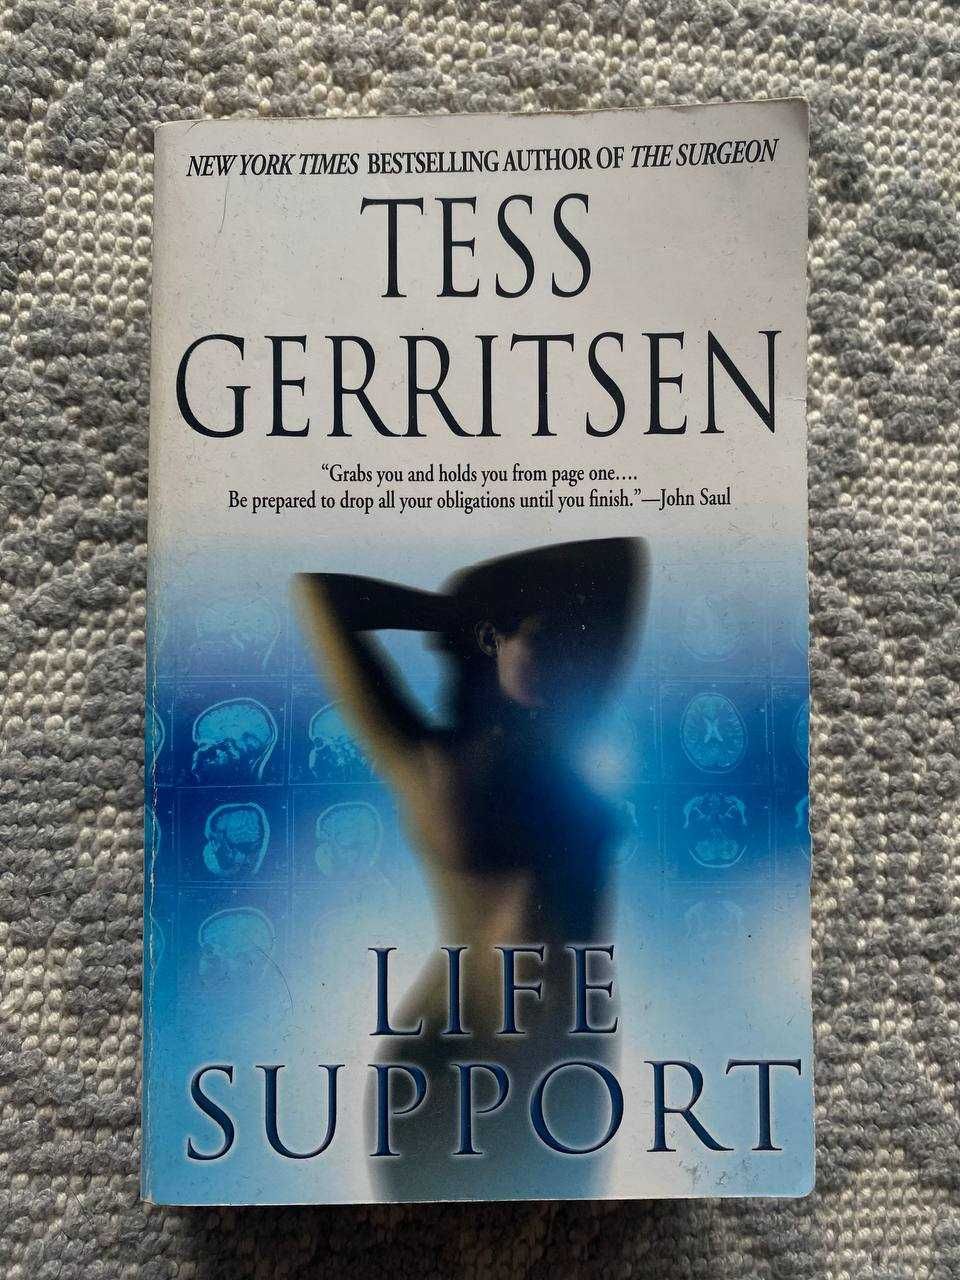 Tess Gerritsen - Life Support